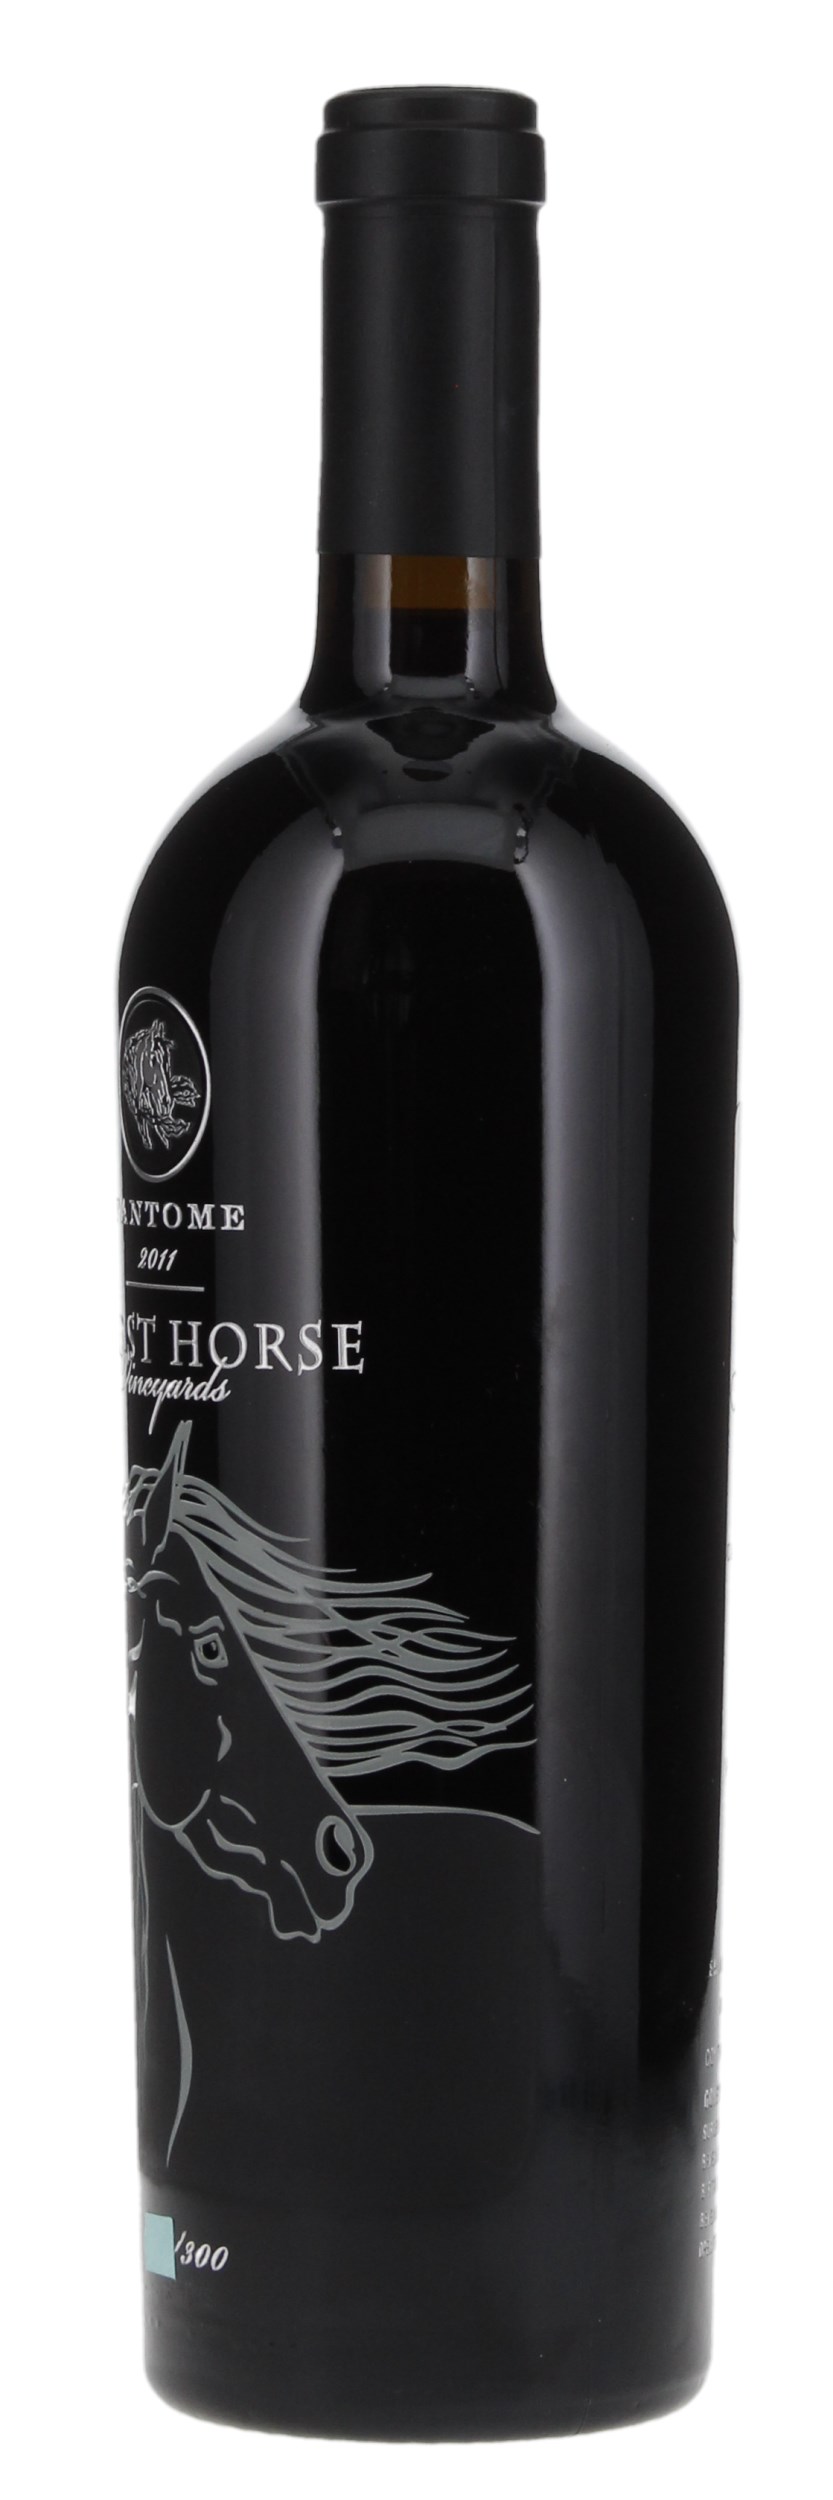 2011 Ghost Horse Vineyard Fantome Cabernet Sauvignon, 750ml